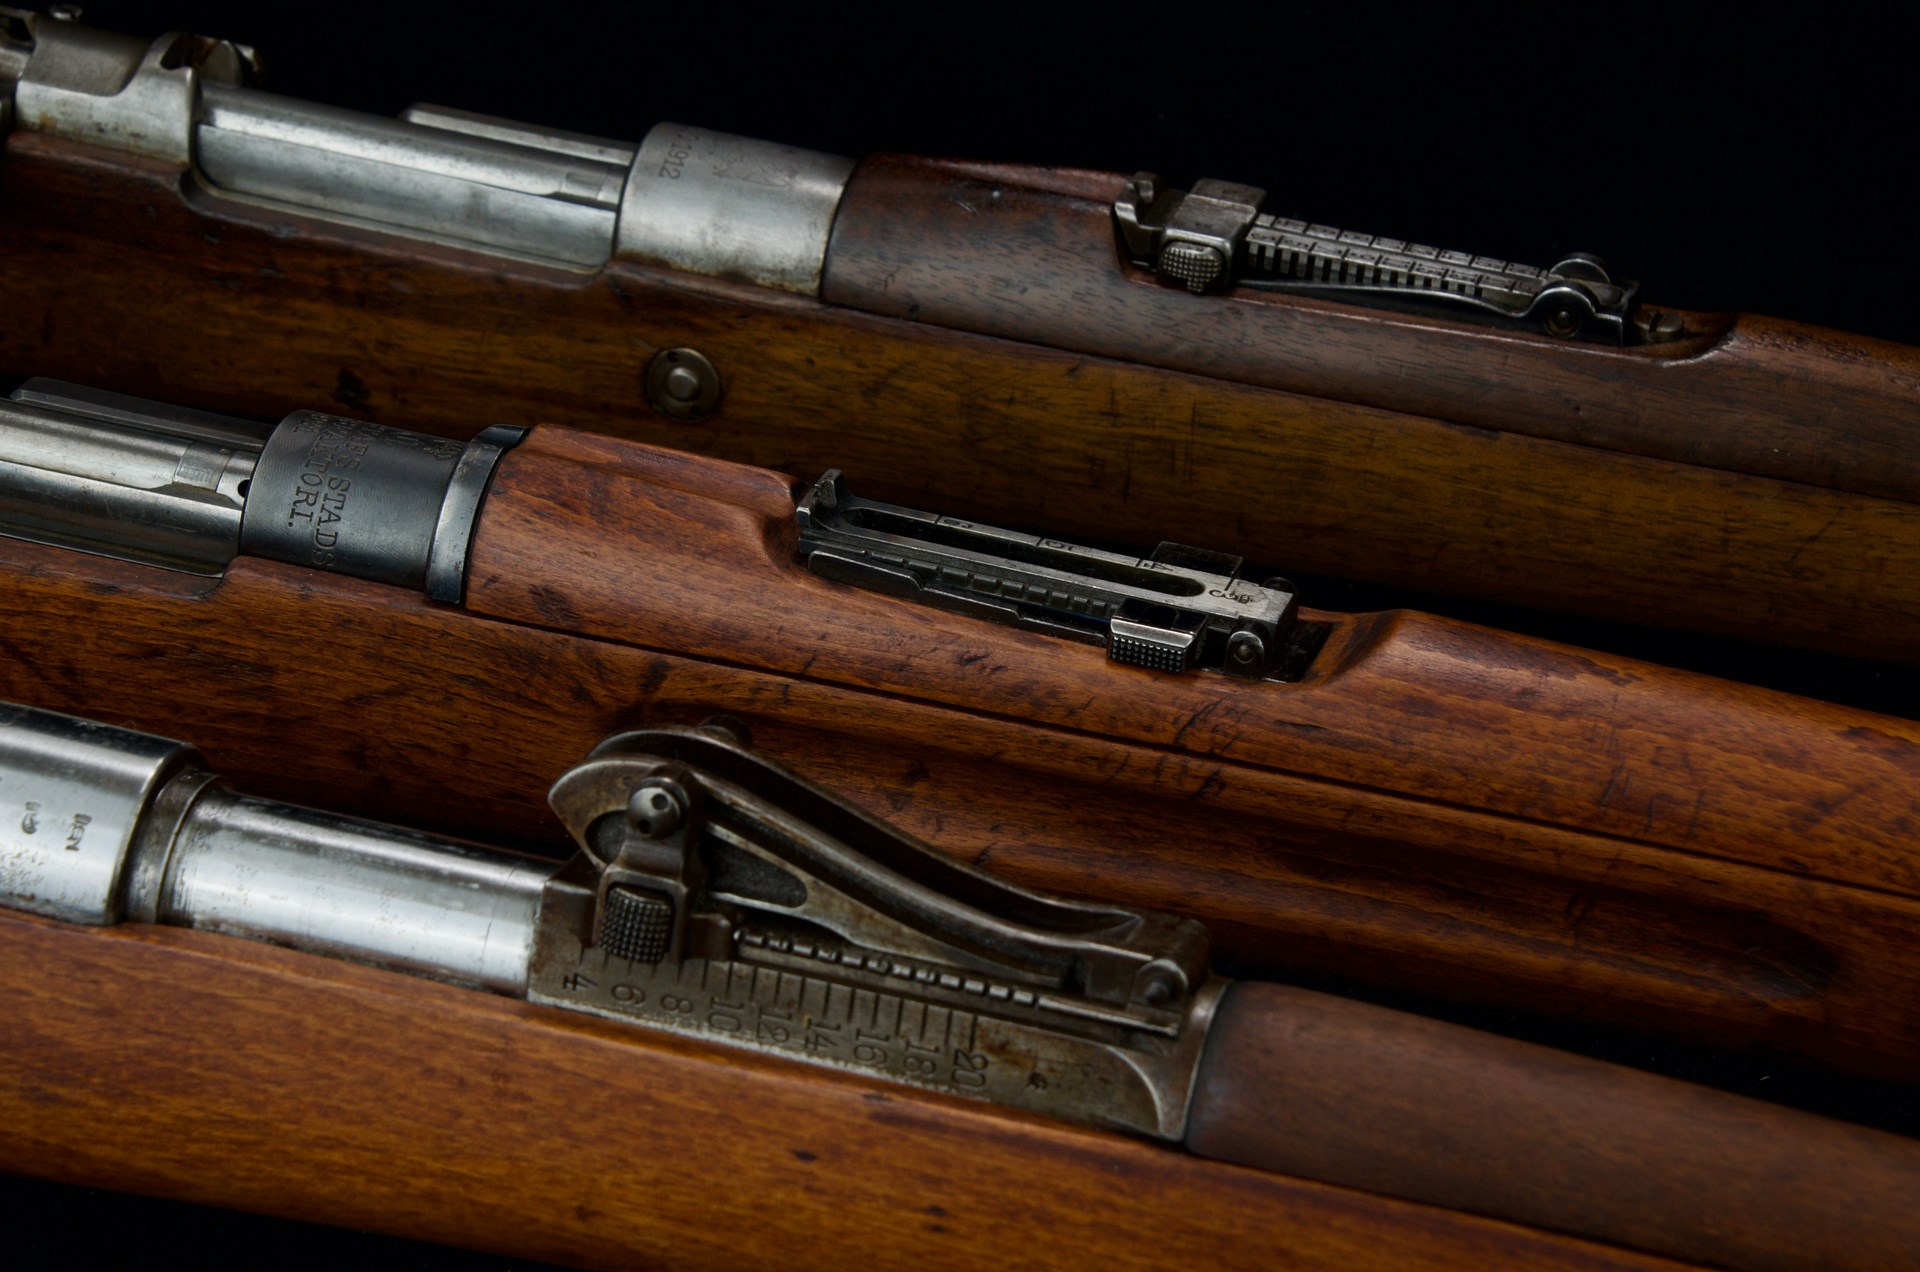 row column rifles detail image sights wood metal gun mauser